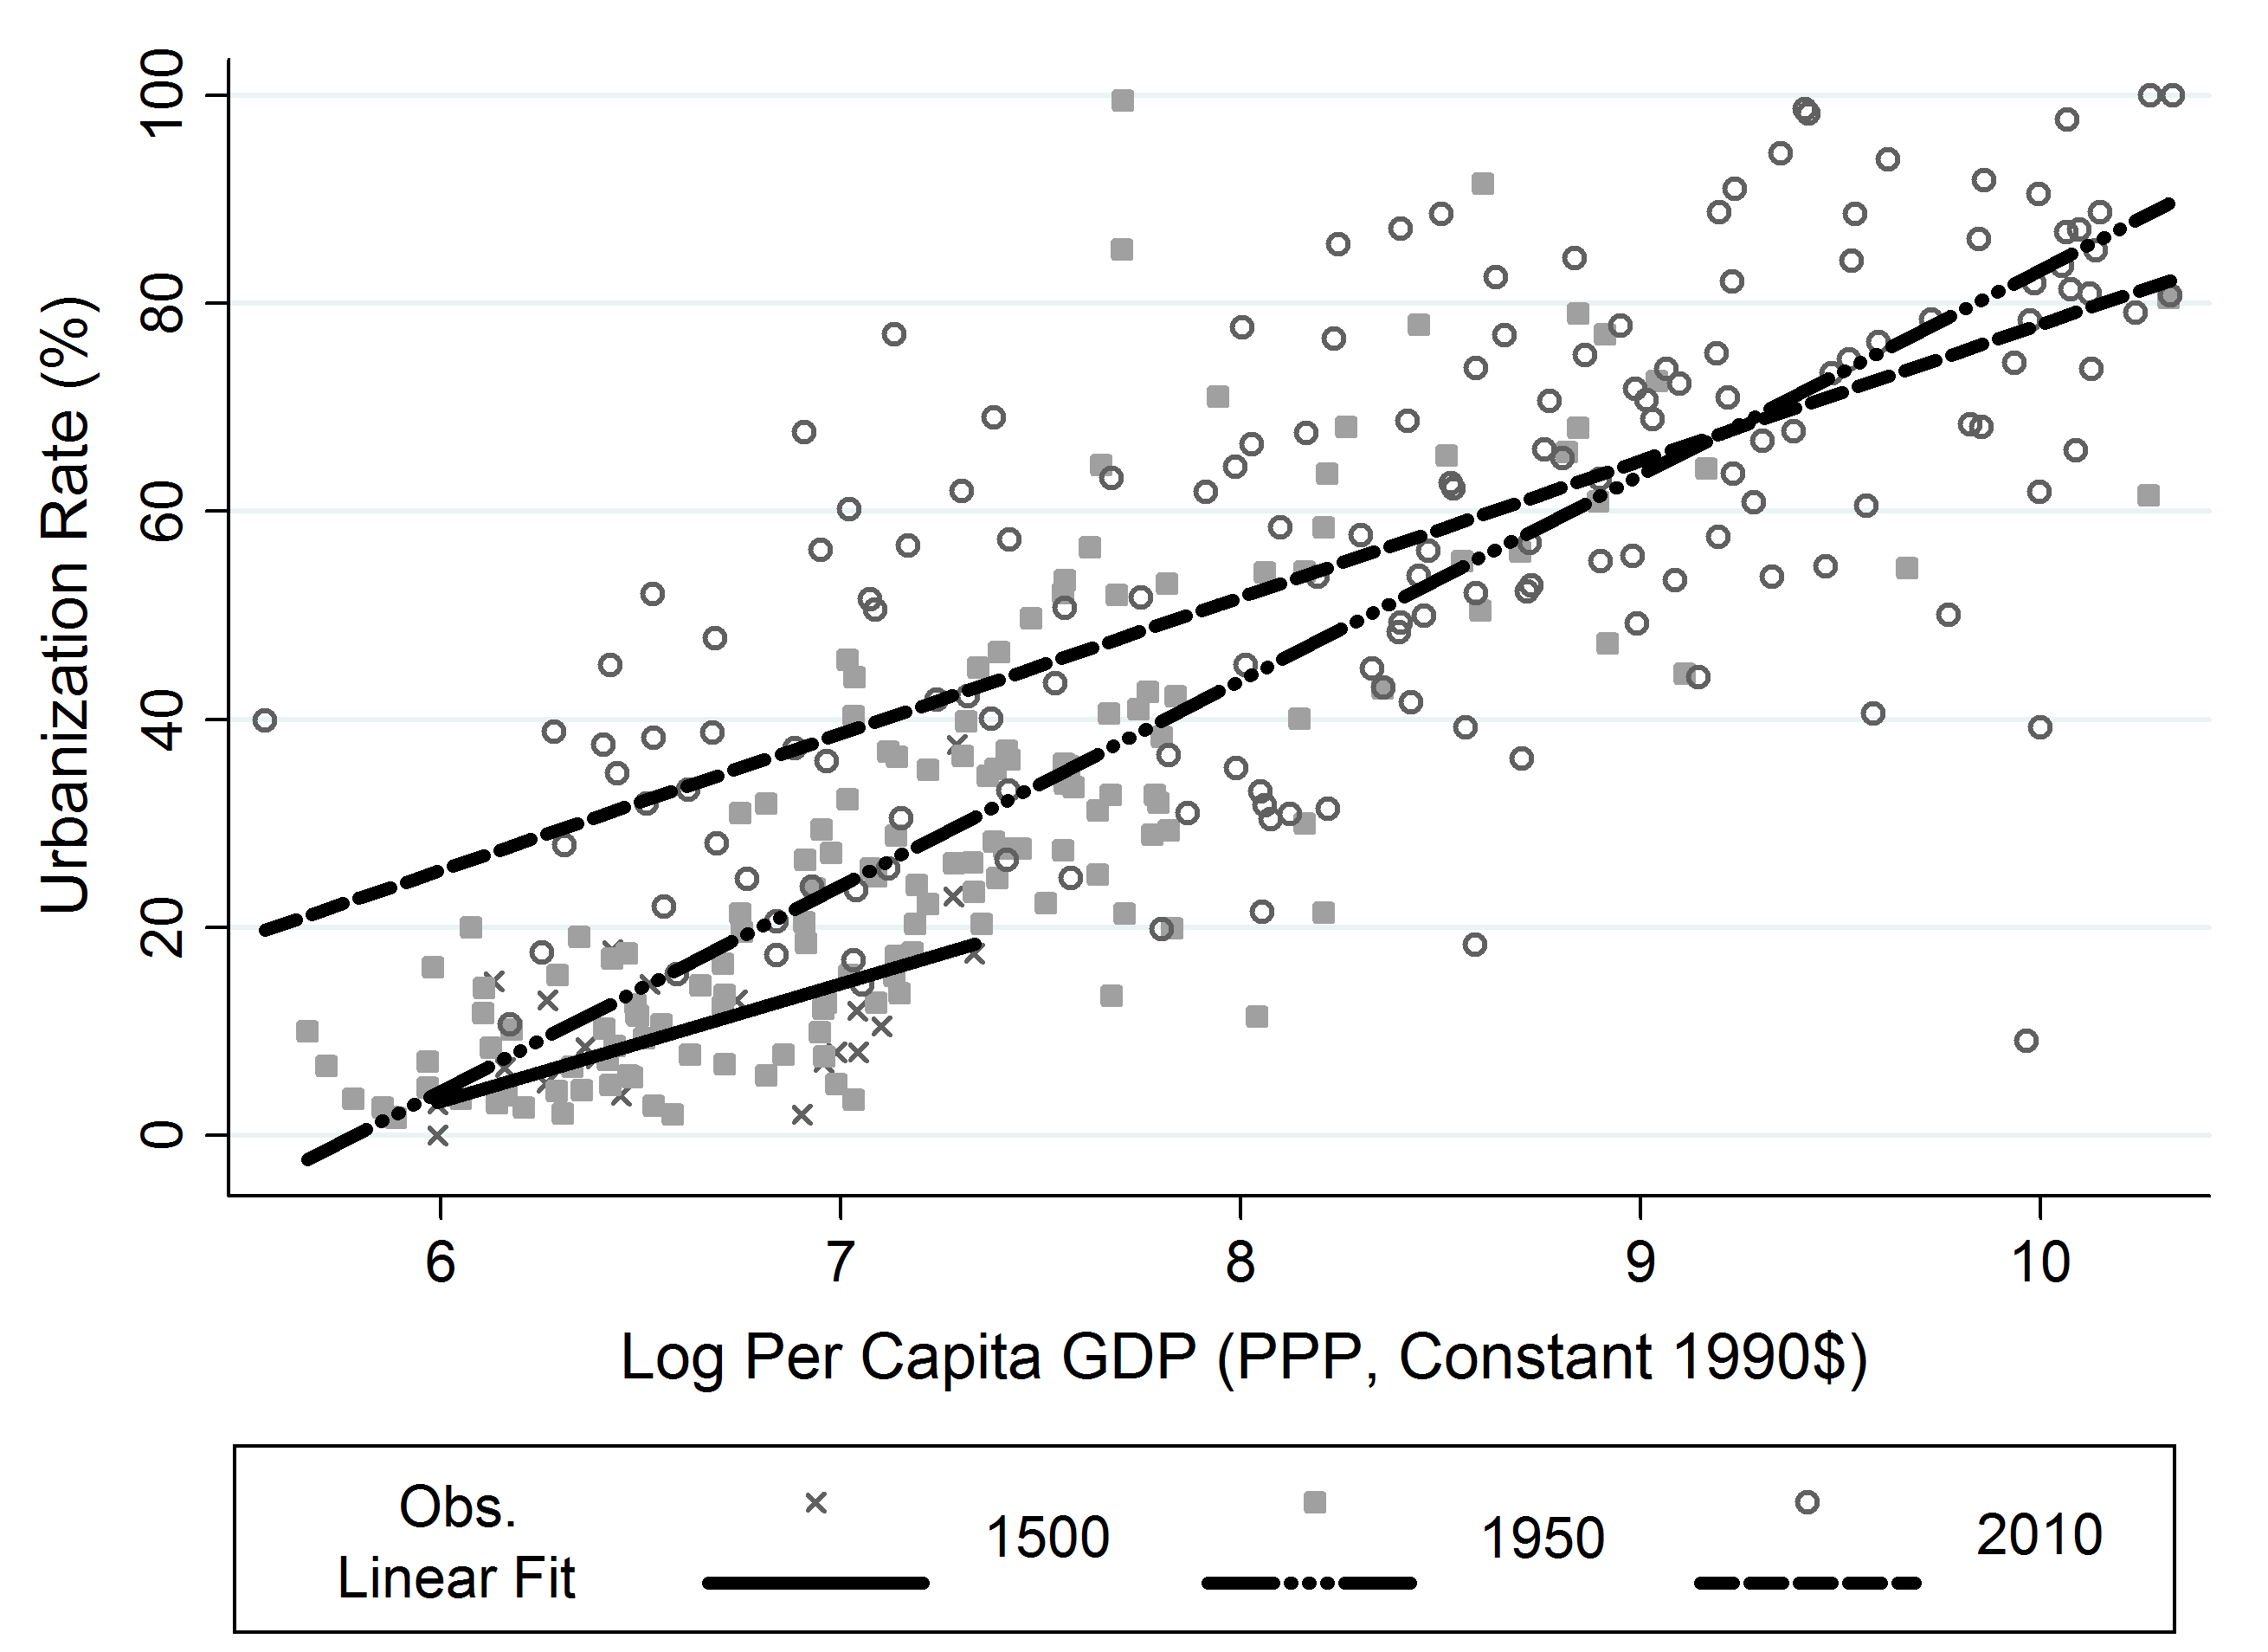 Urbanization and GDP per Capita Over Time